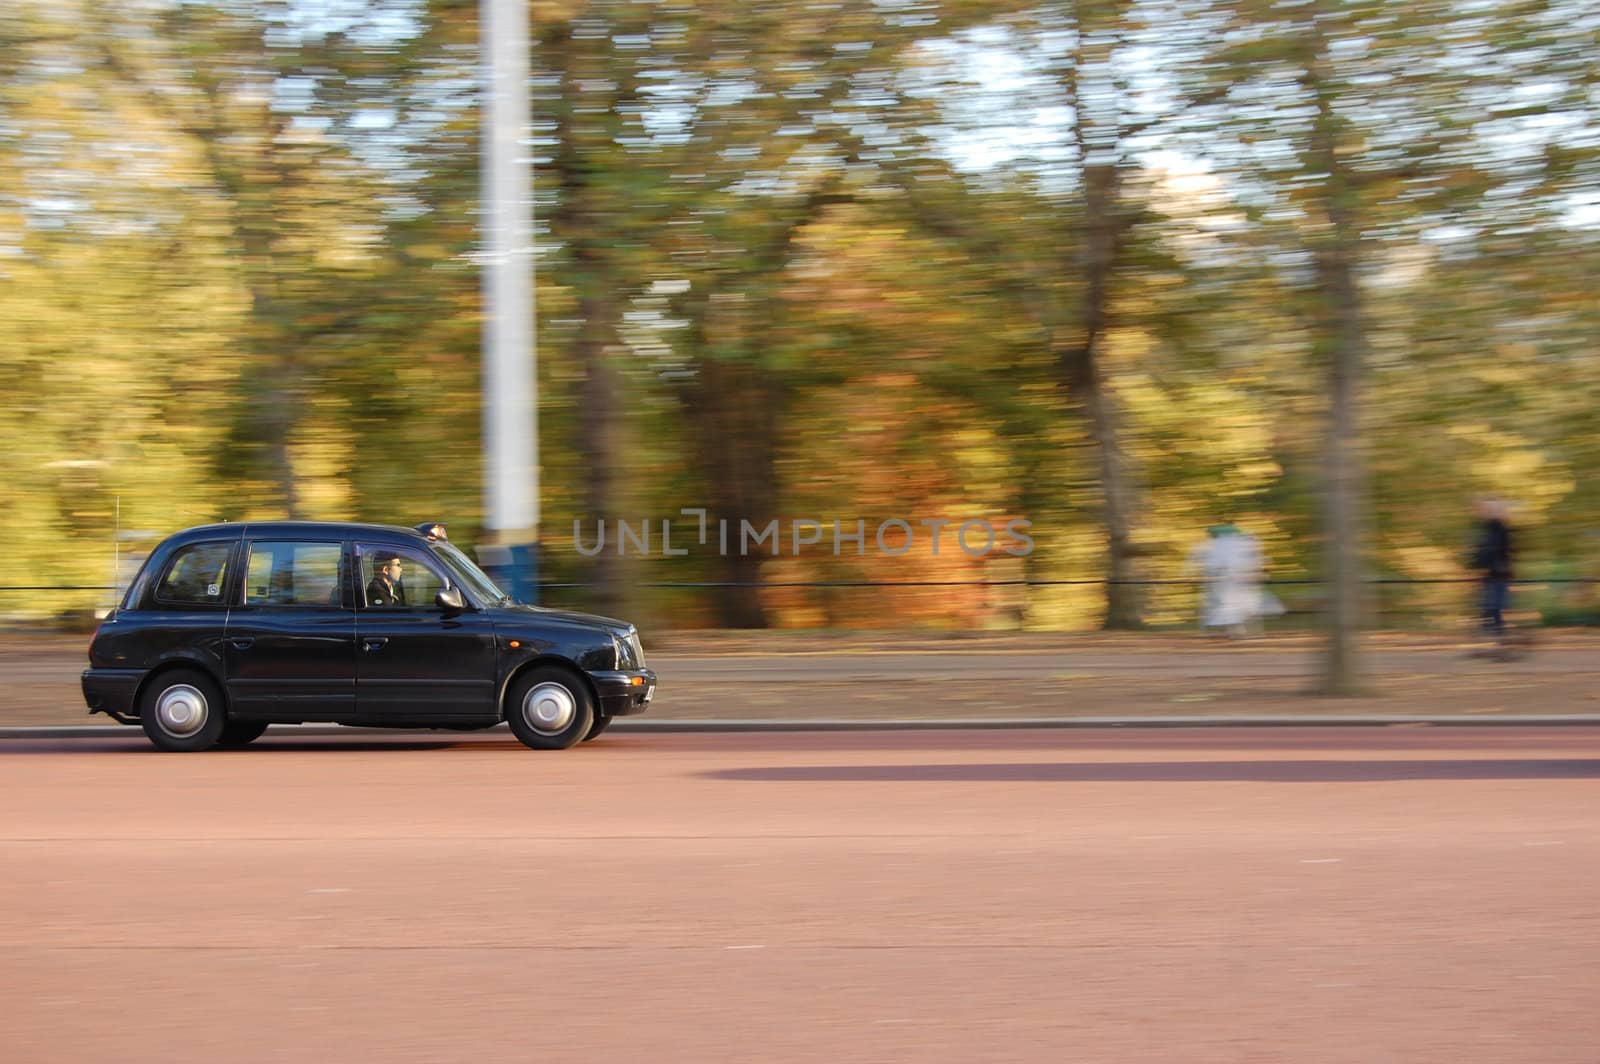 London black taxi passing St James Park near Buckingham Palace